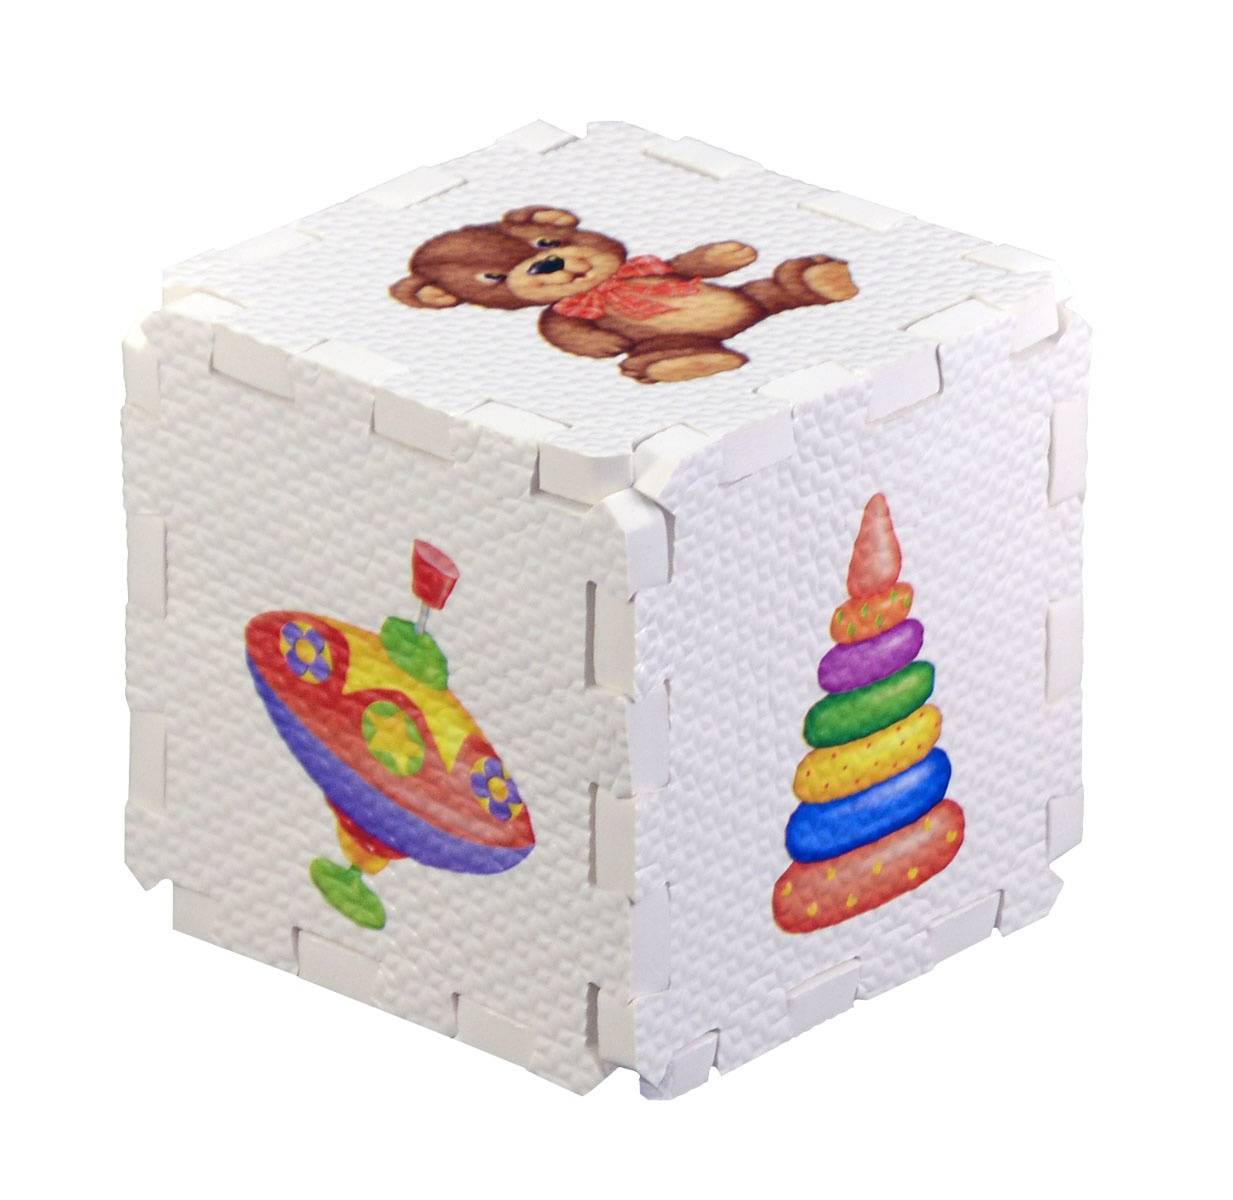 Игрушки, Развивающий кубик-пазл Игрушки Робинс 701062, фото 1